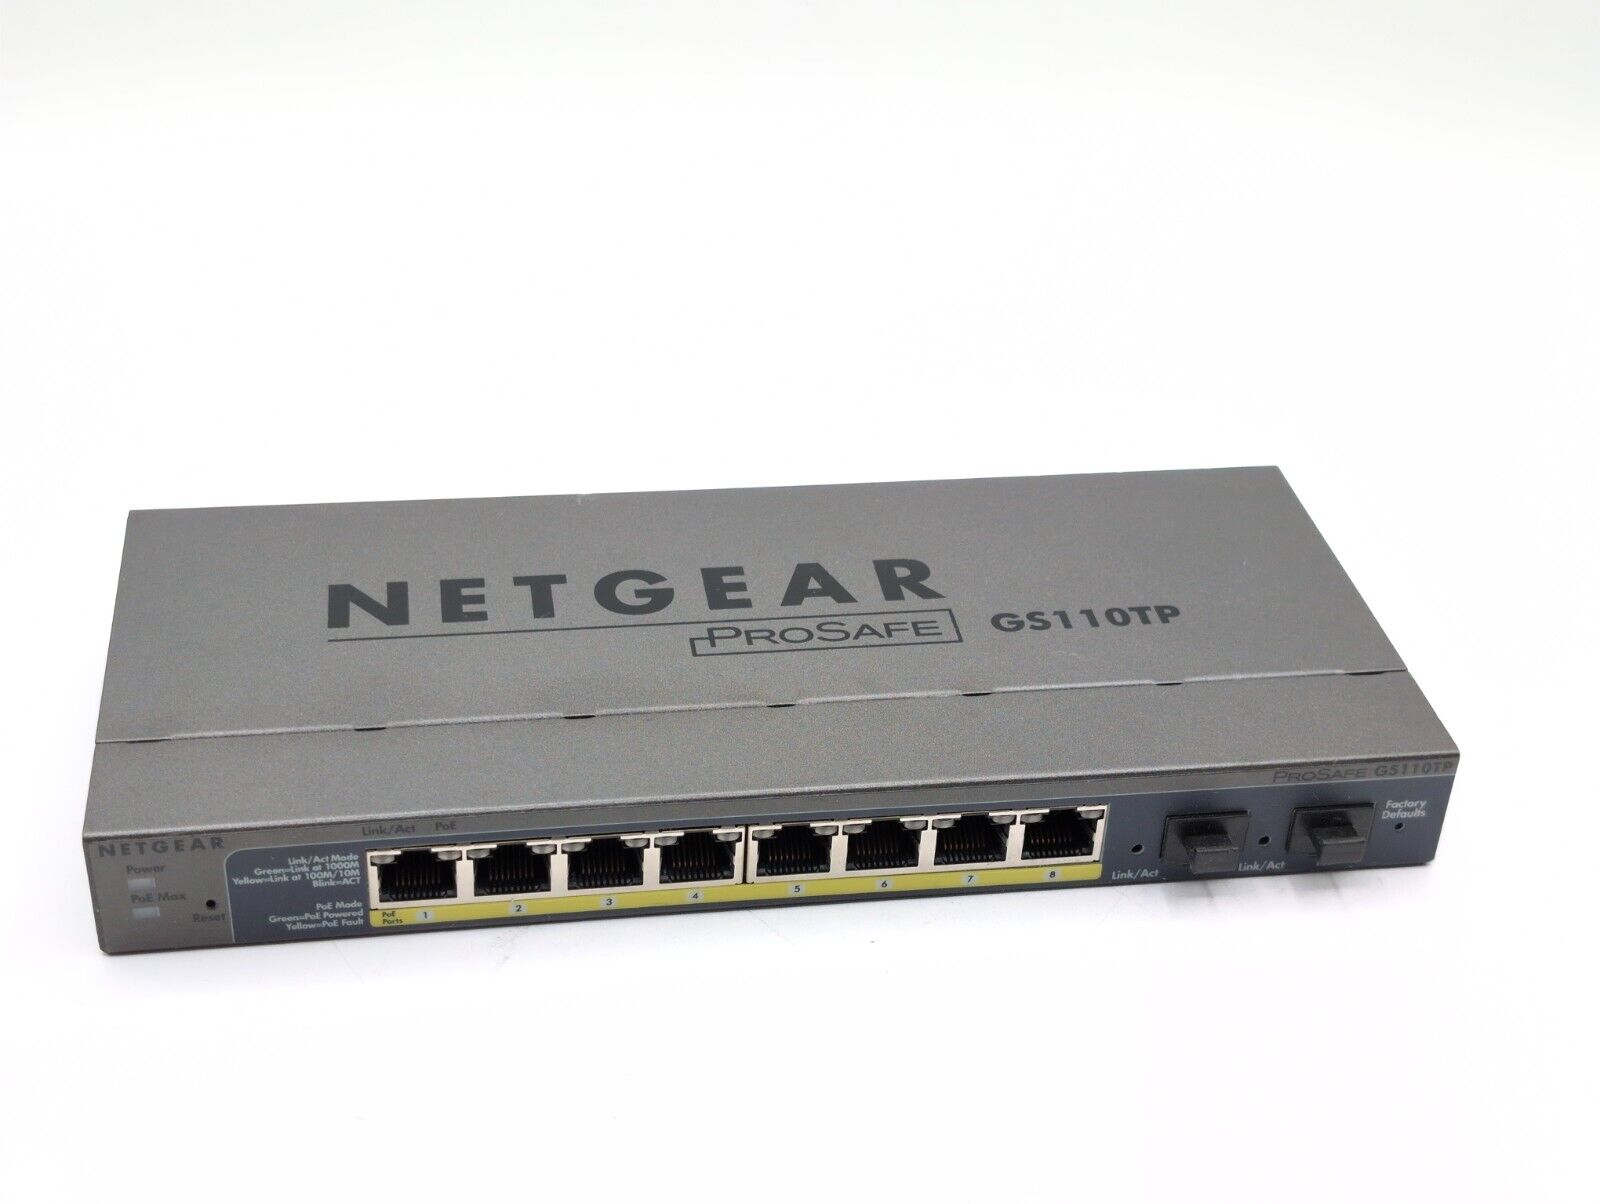 Netgear ProSafe GS110TP 8-Port PoE Gigabit Switch - No AC adapter -  USED